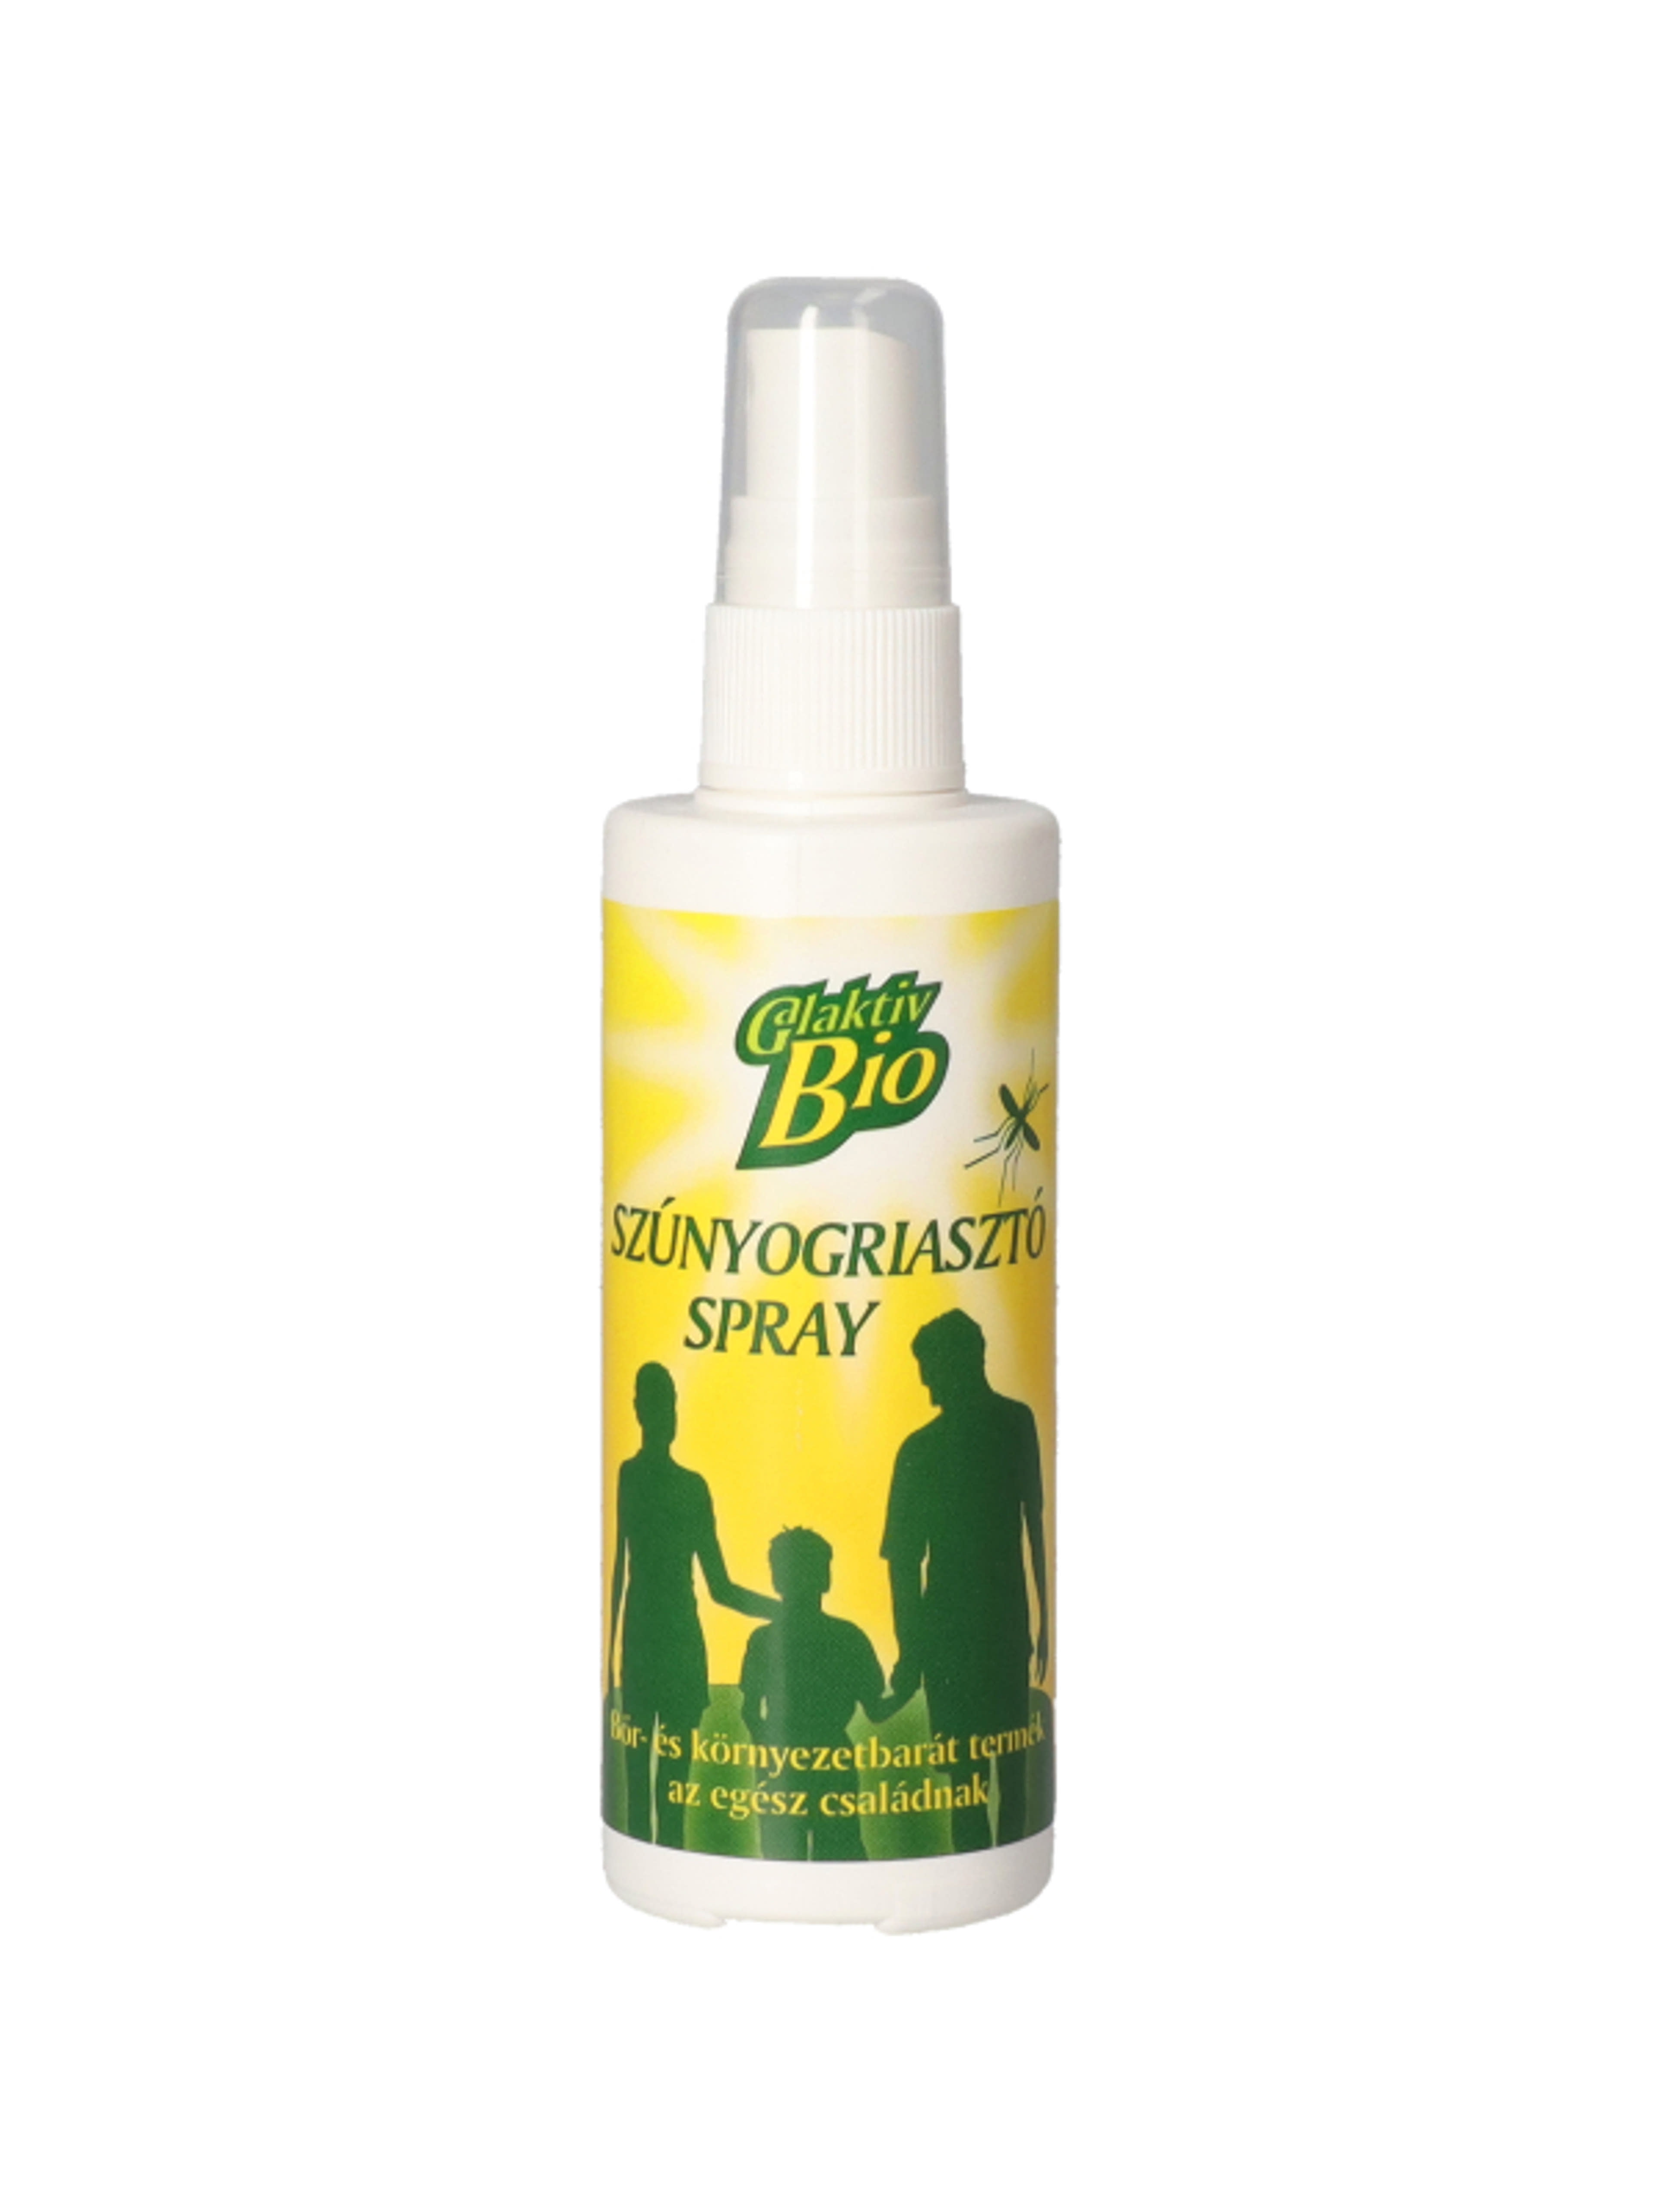 Galaktiv Bio Szúnyogírtó Spray - 100 ml-1